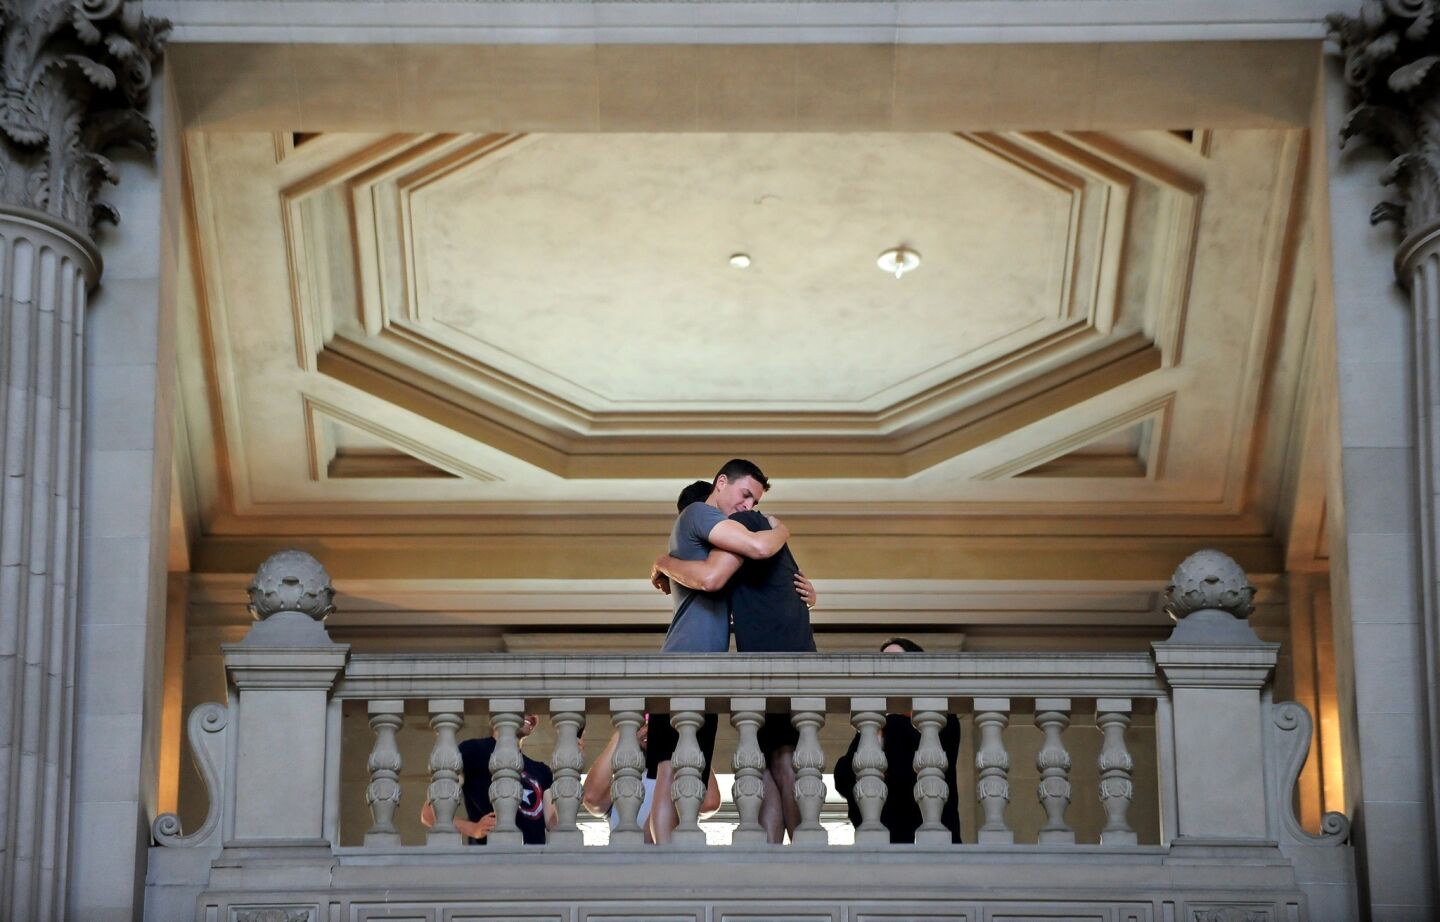 Gay marriage in San Francisco